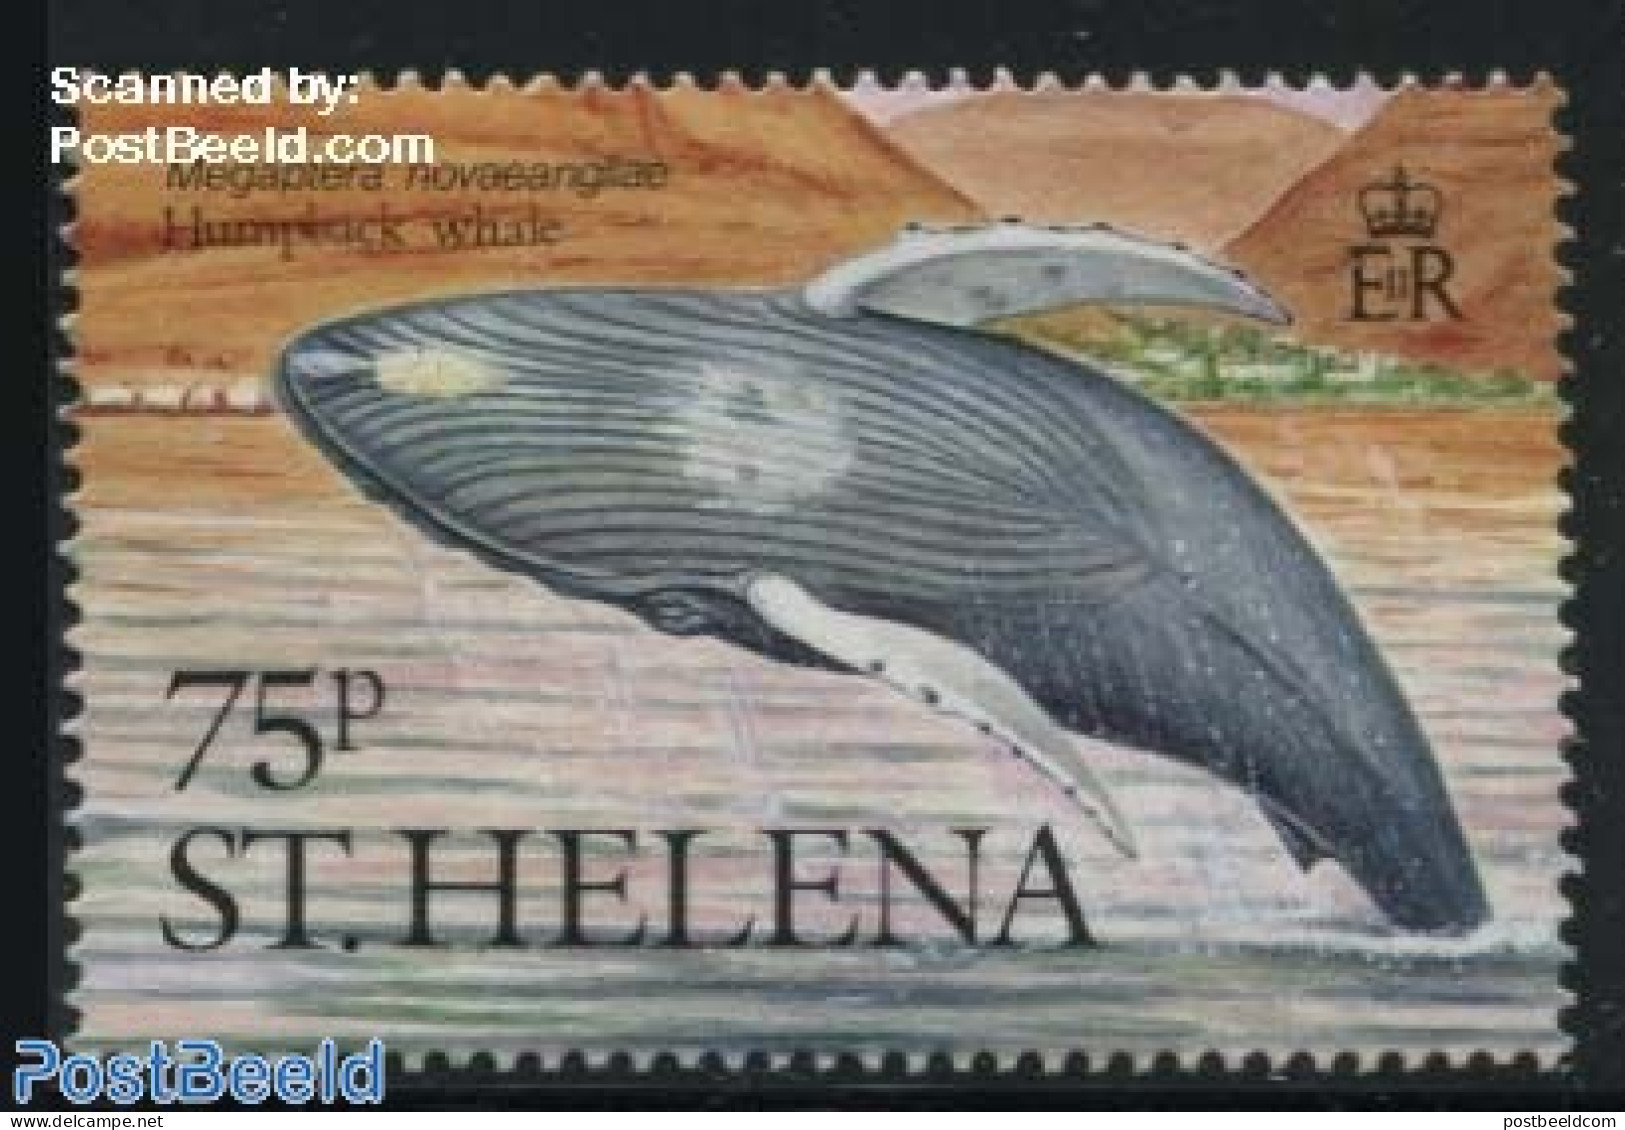 Saint Helena 1987 Whale 1v (from S/s), Mint NH, Nature - Sea Mammals - Sainte-Hélène